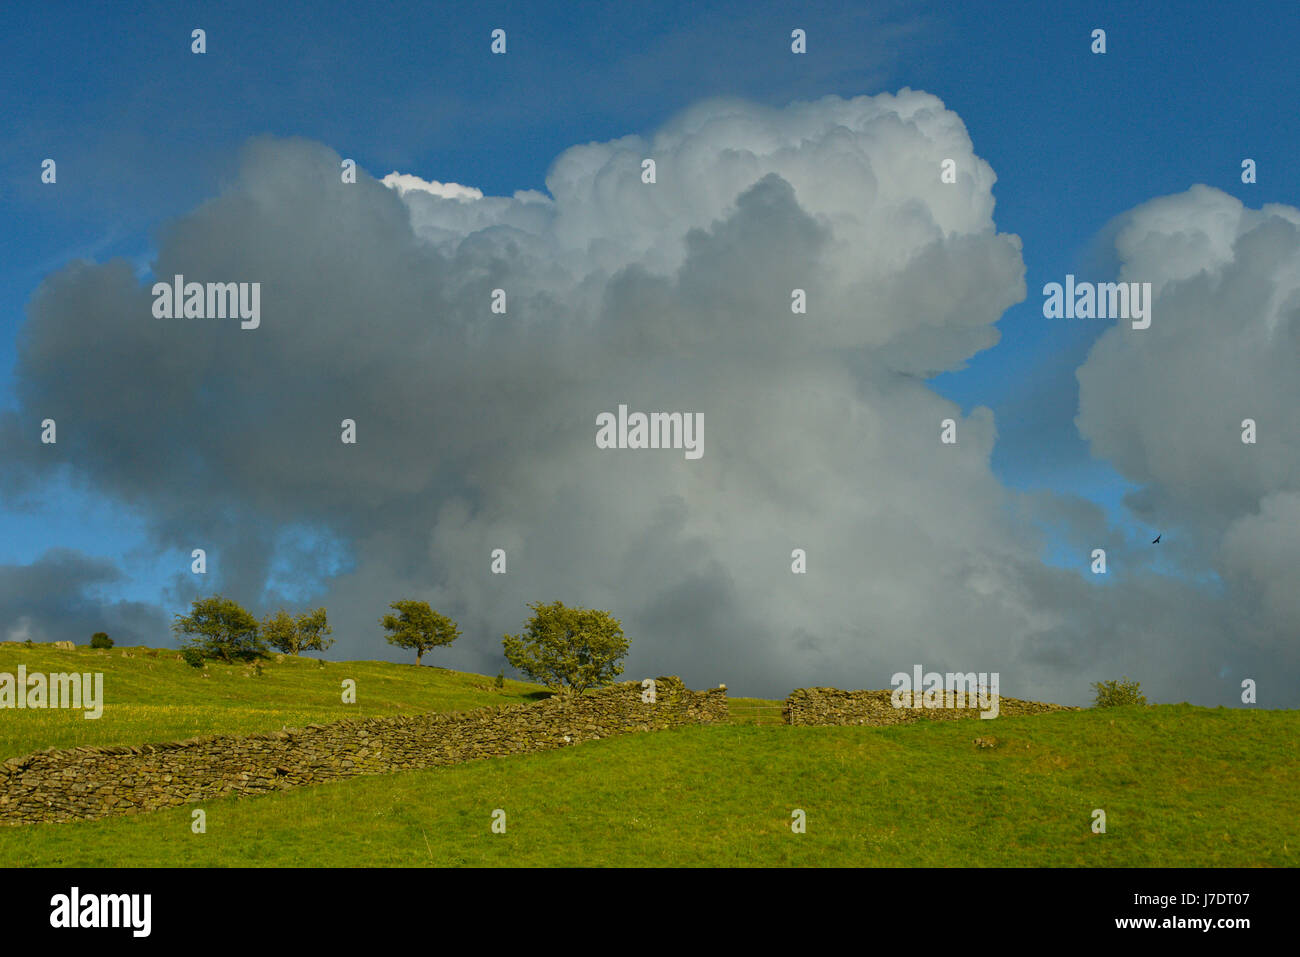 Lake District landscape, Cumbria, England, UK Stock Photo